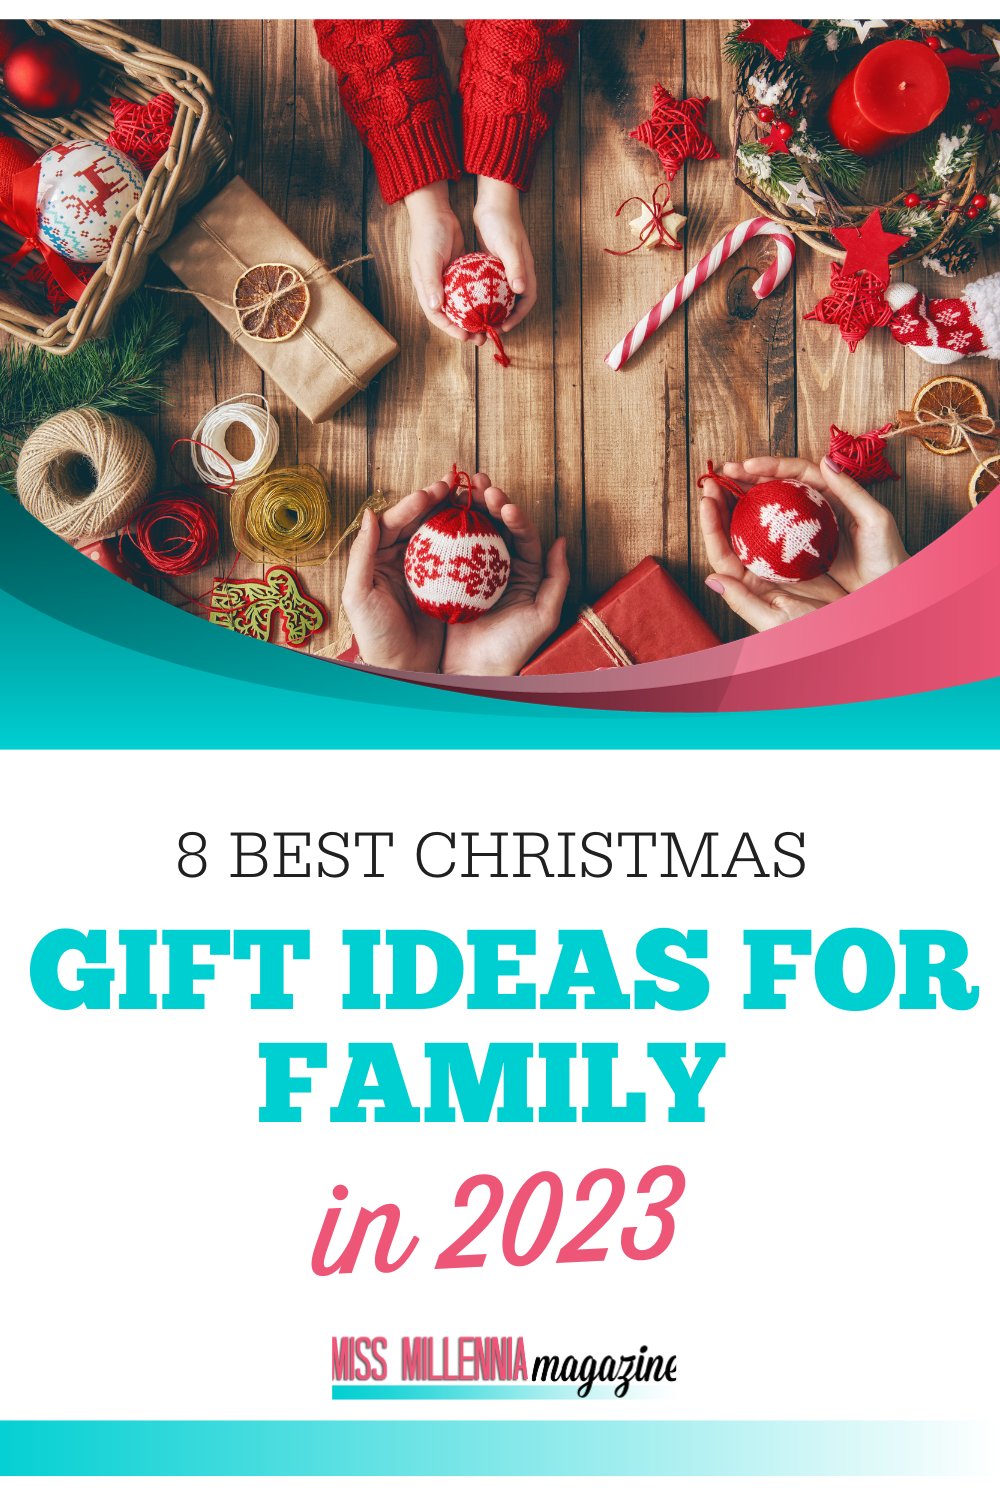 8 Best Christmas Gift Ideas For Family in 2023